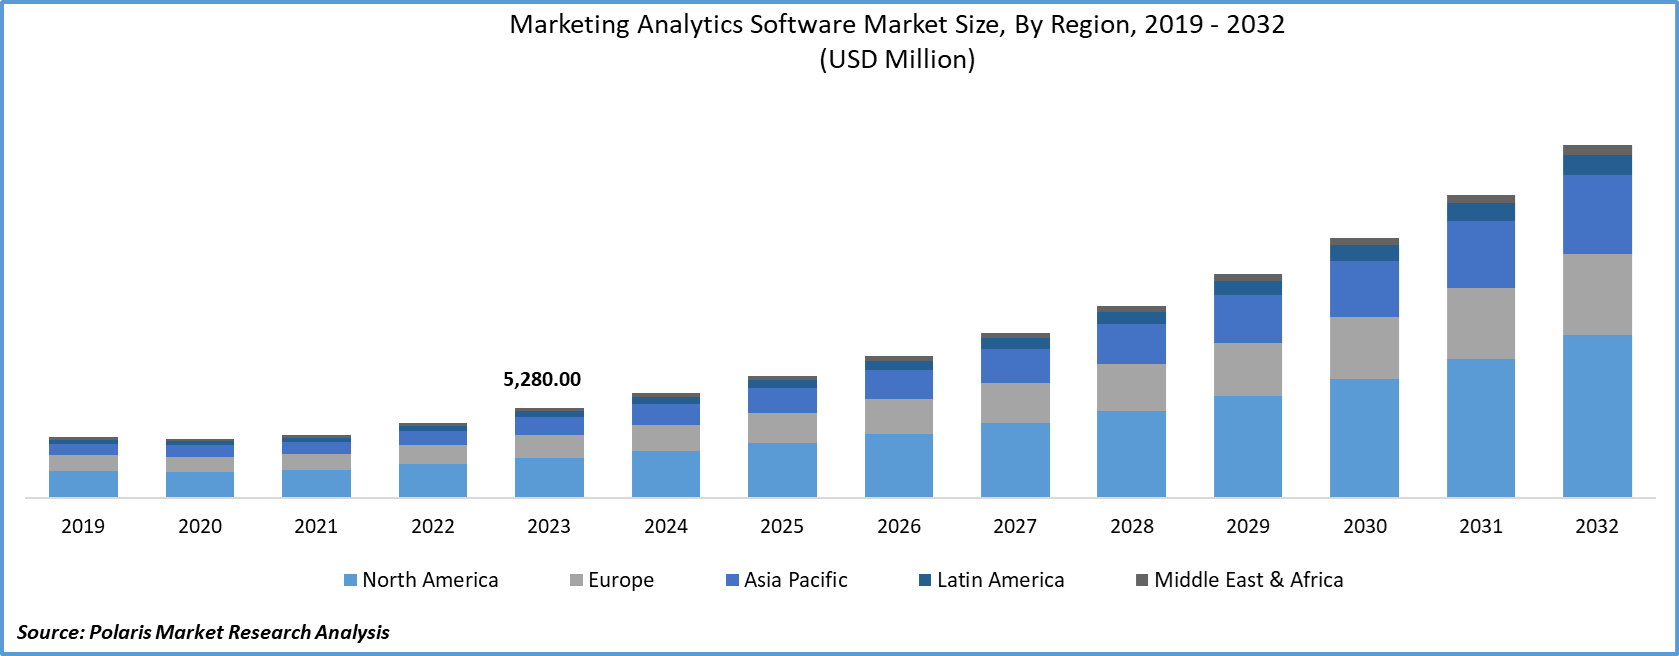 Marketing Analytics Software Market Size